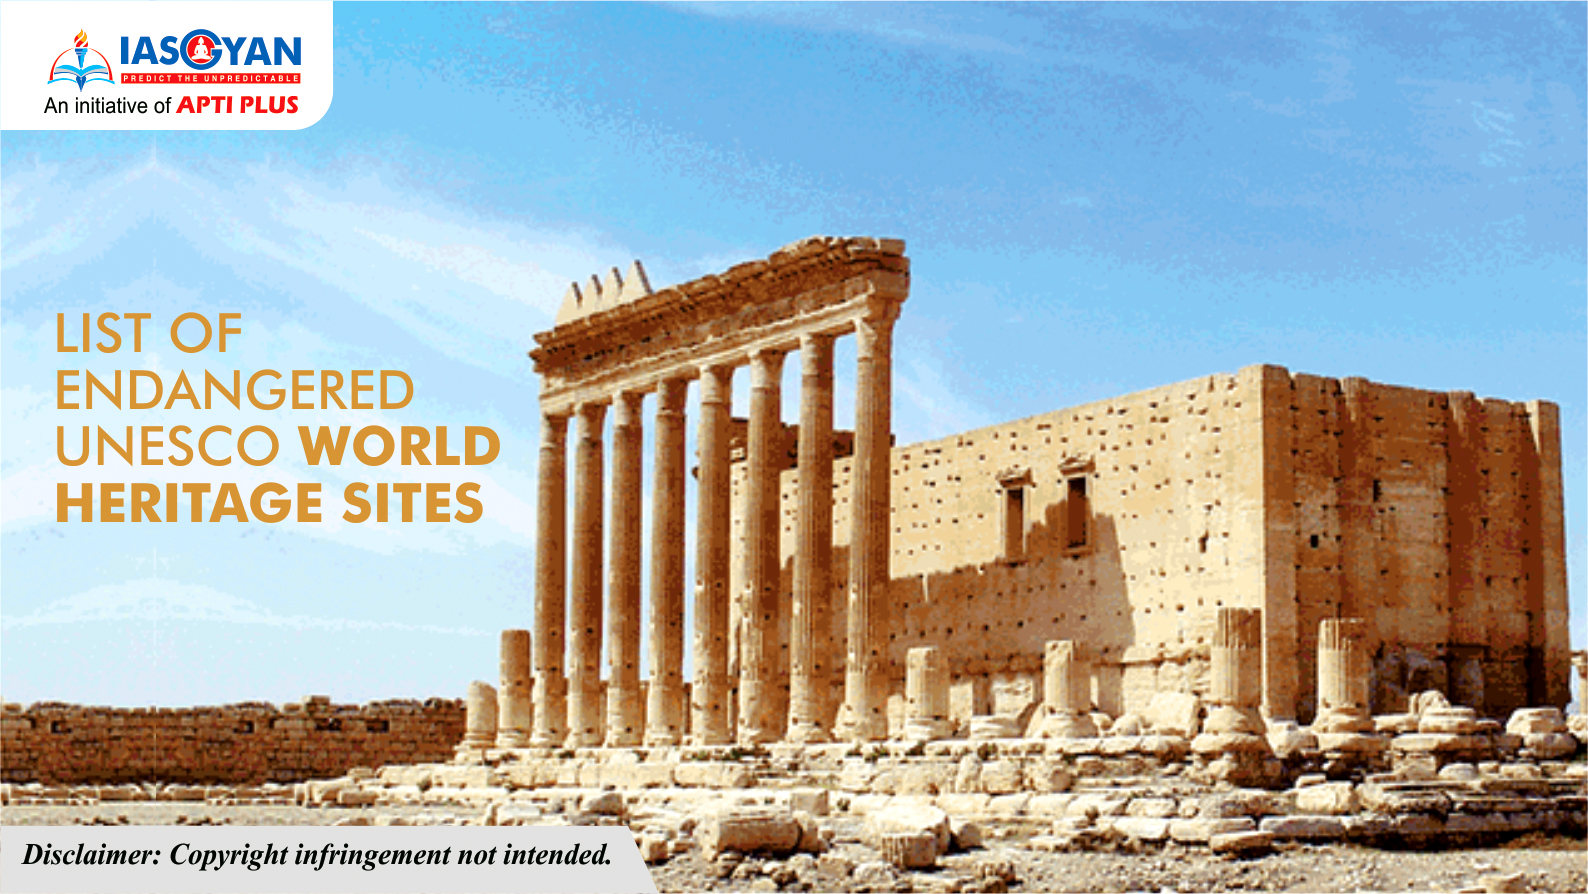 LIST OF ENDANGERED UNESCO WORLD HERITAGE SITES